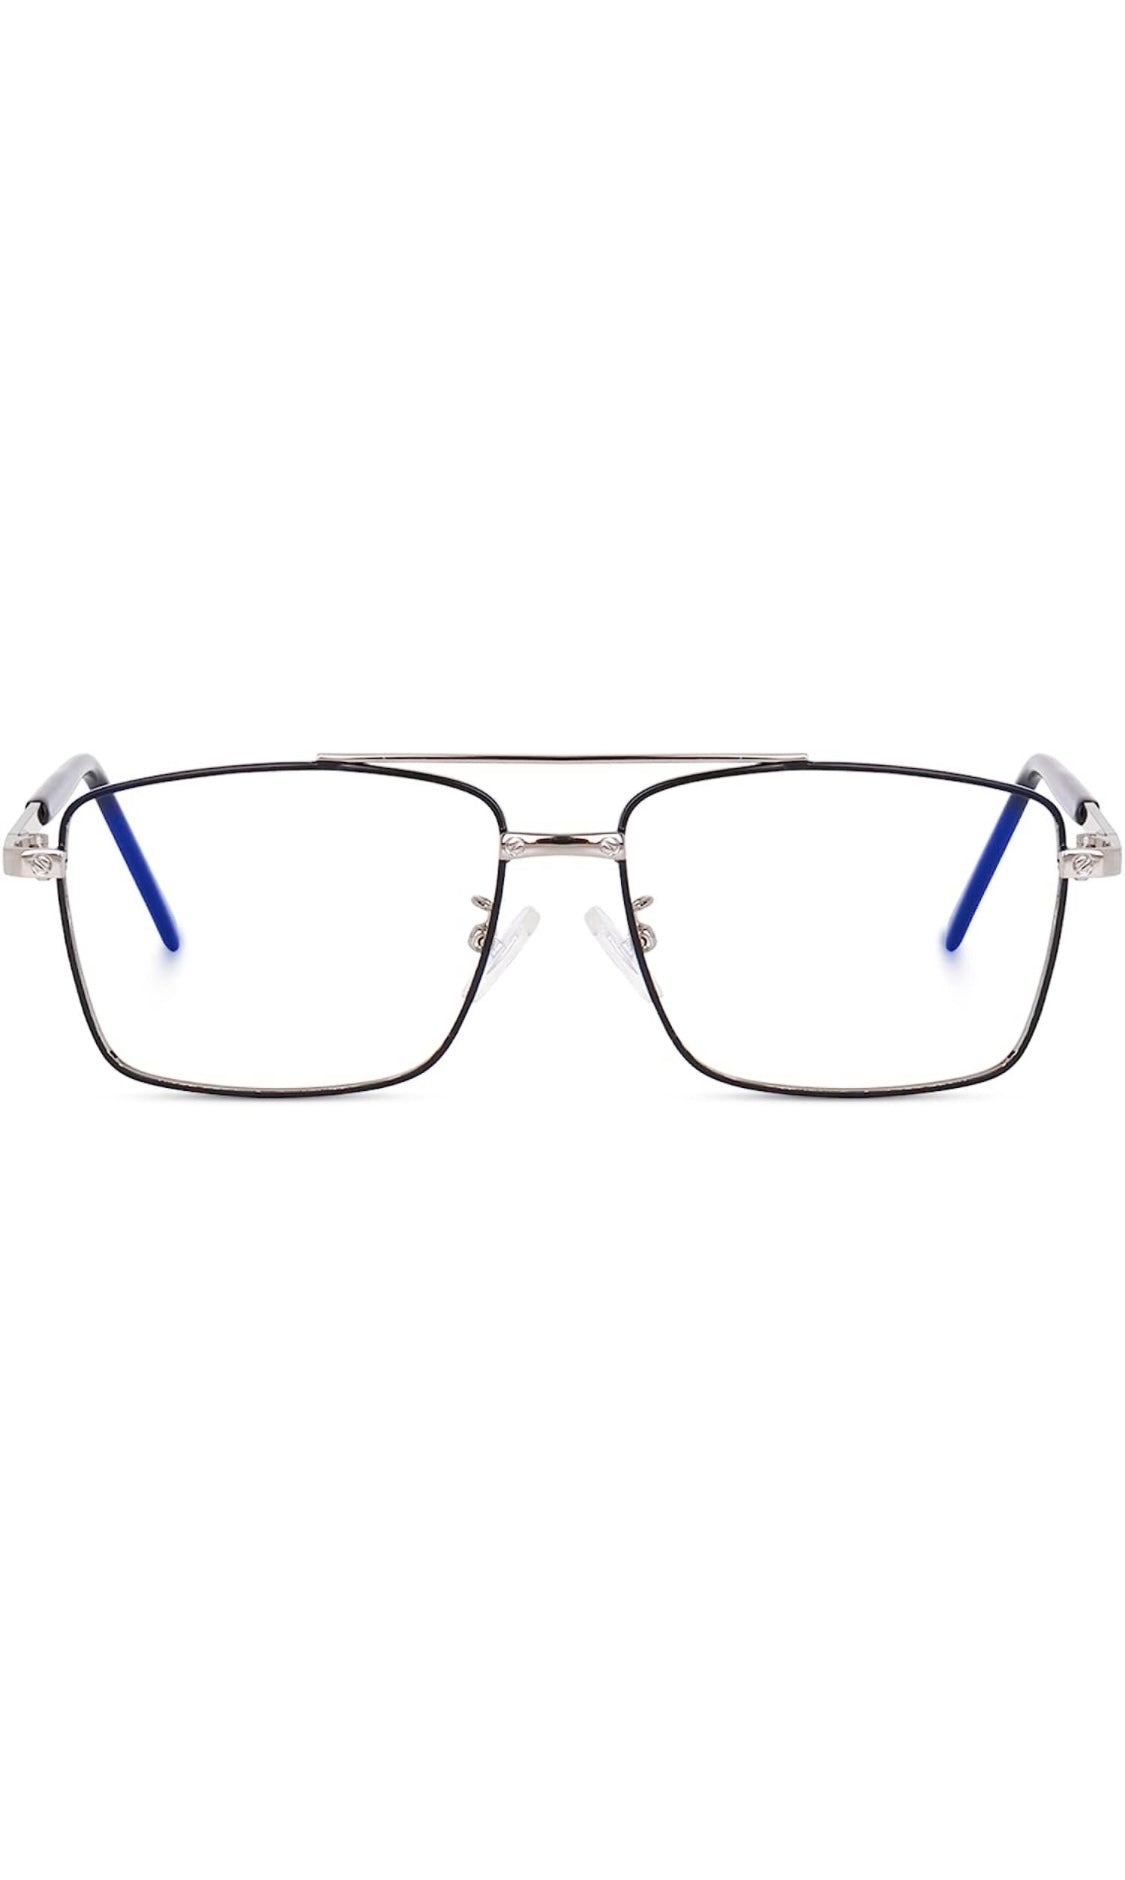 Jodykoes® New Full Rim Rectangular Blue Light Protection Computer Eyeglasses Metal Frame With Anti Glare and Blu Cut Glasses Spectacles for Men and Women Eyewear (Black & Silver) - Jodykoes ®